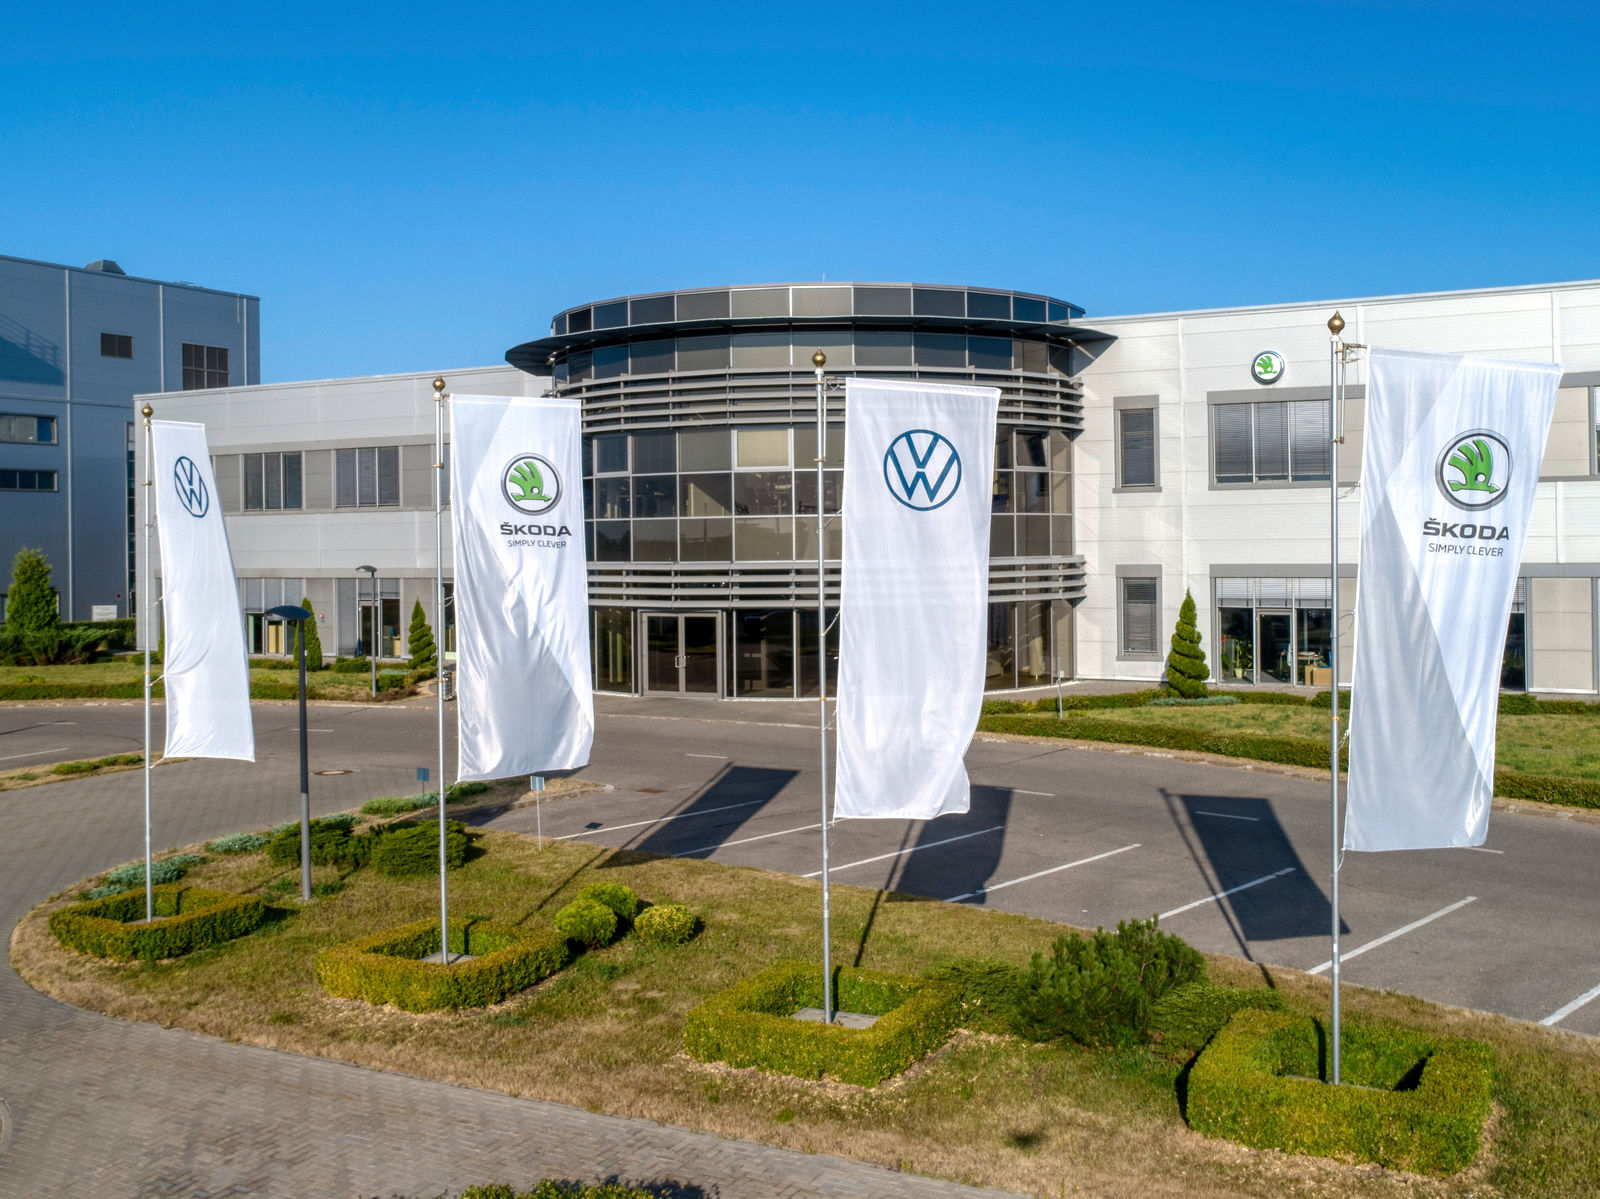 LLC Volkswagen Group Rus, Kaluga plant, Russia